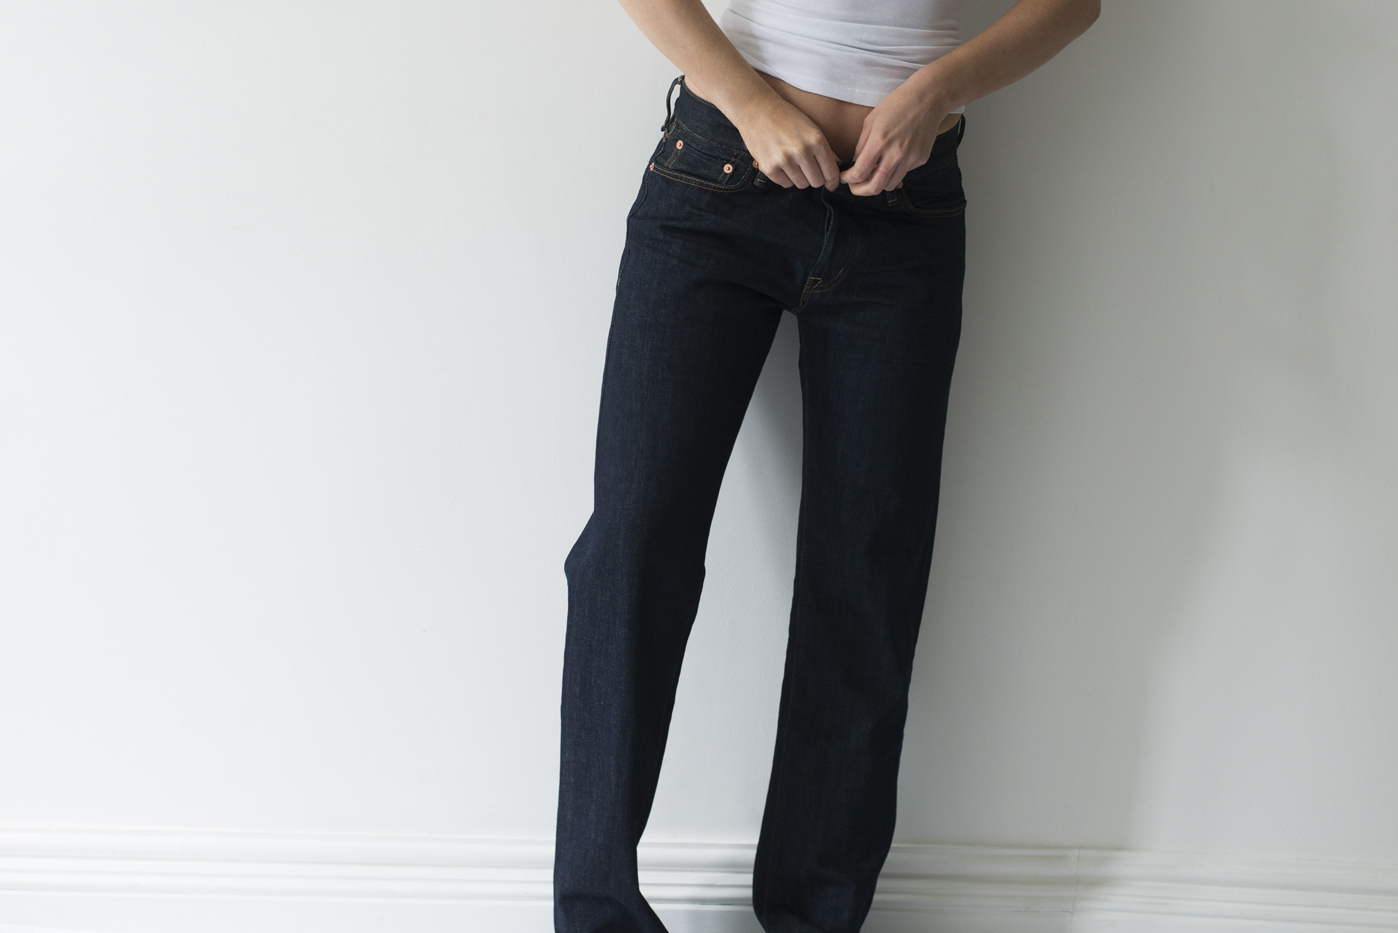 Girl Fart In Jeans